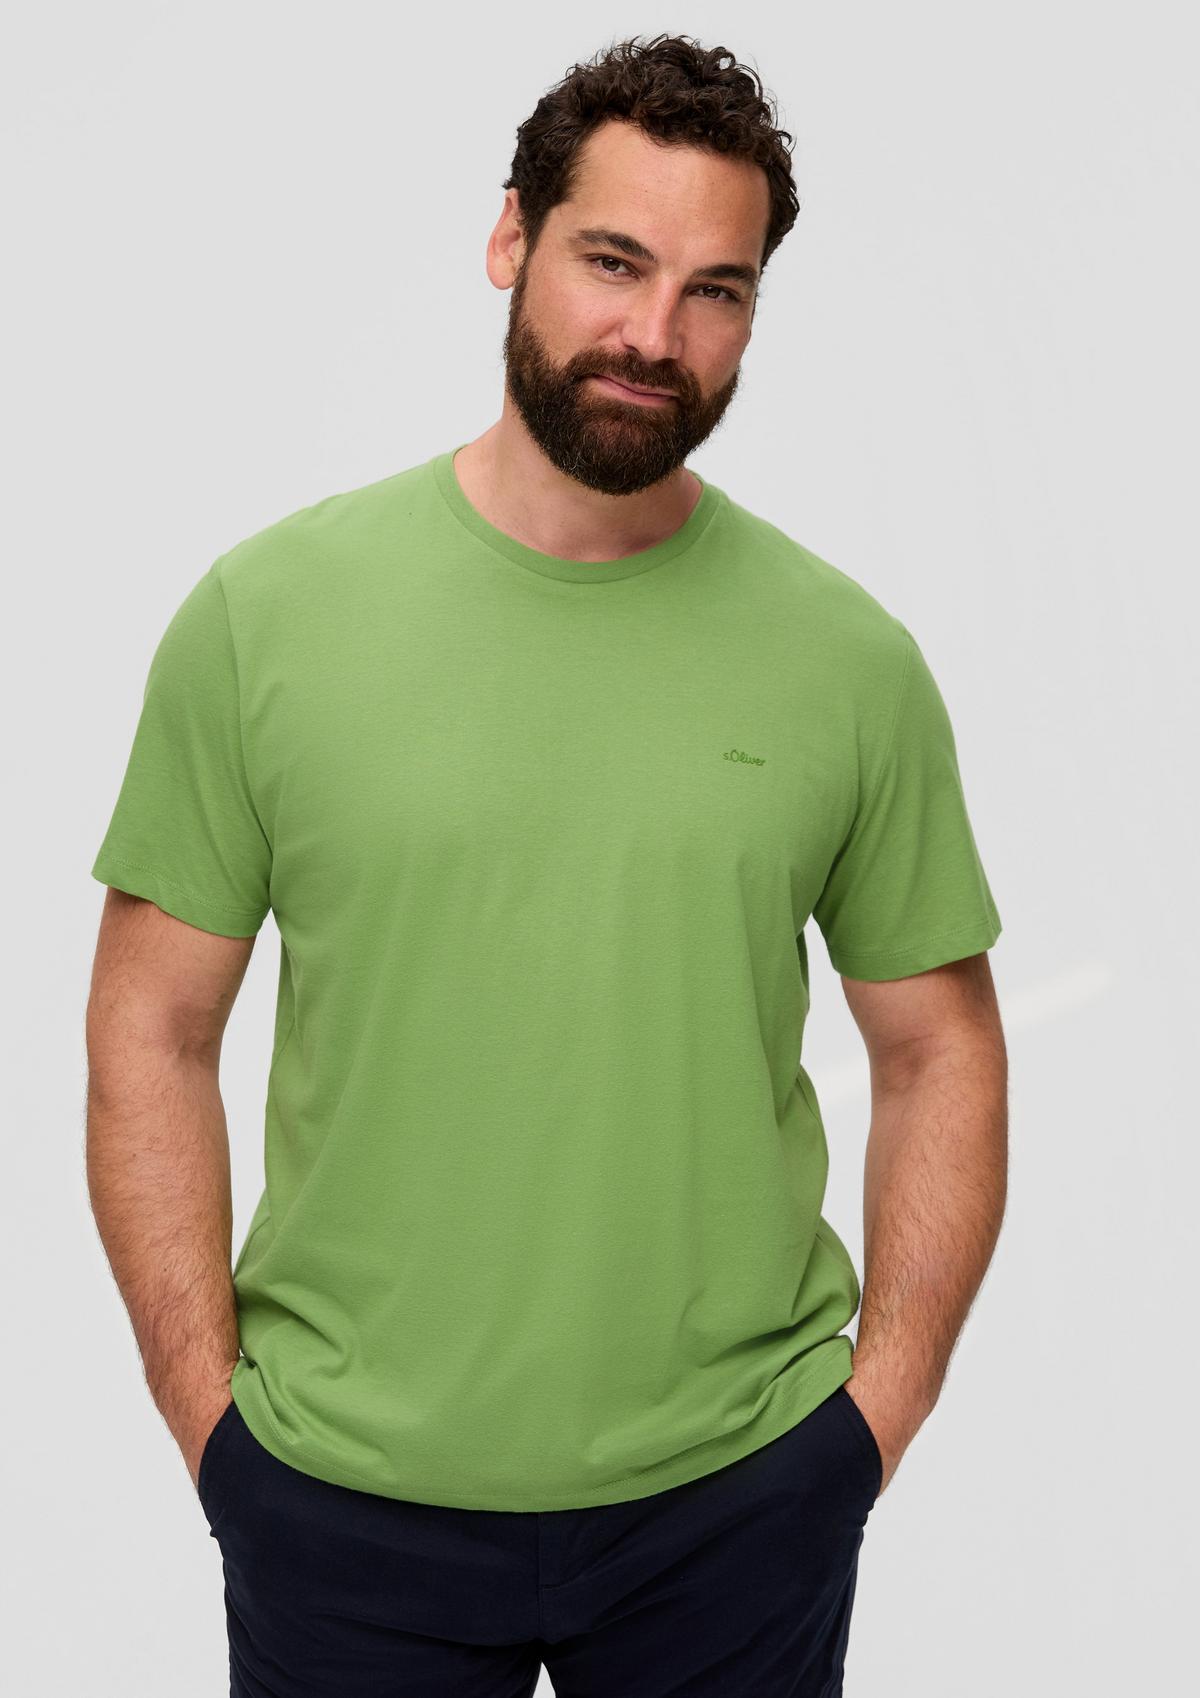 Plain T-Shirts for Men